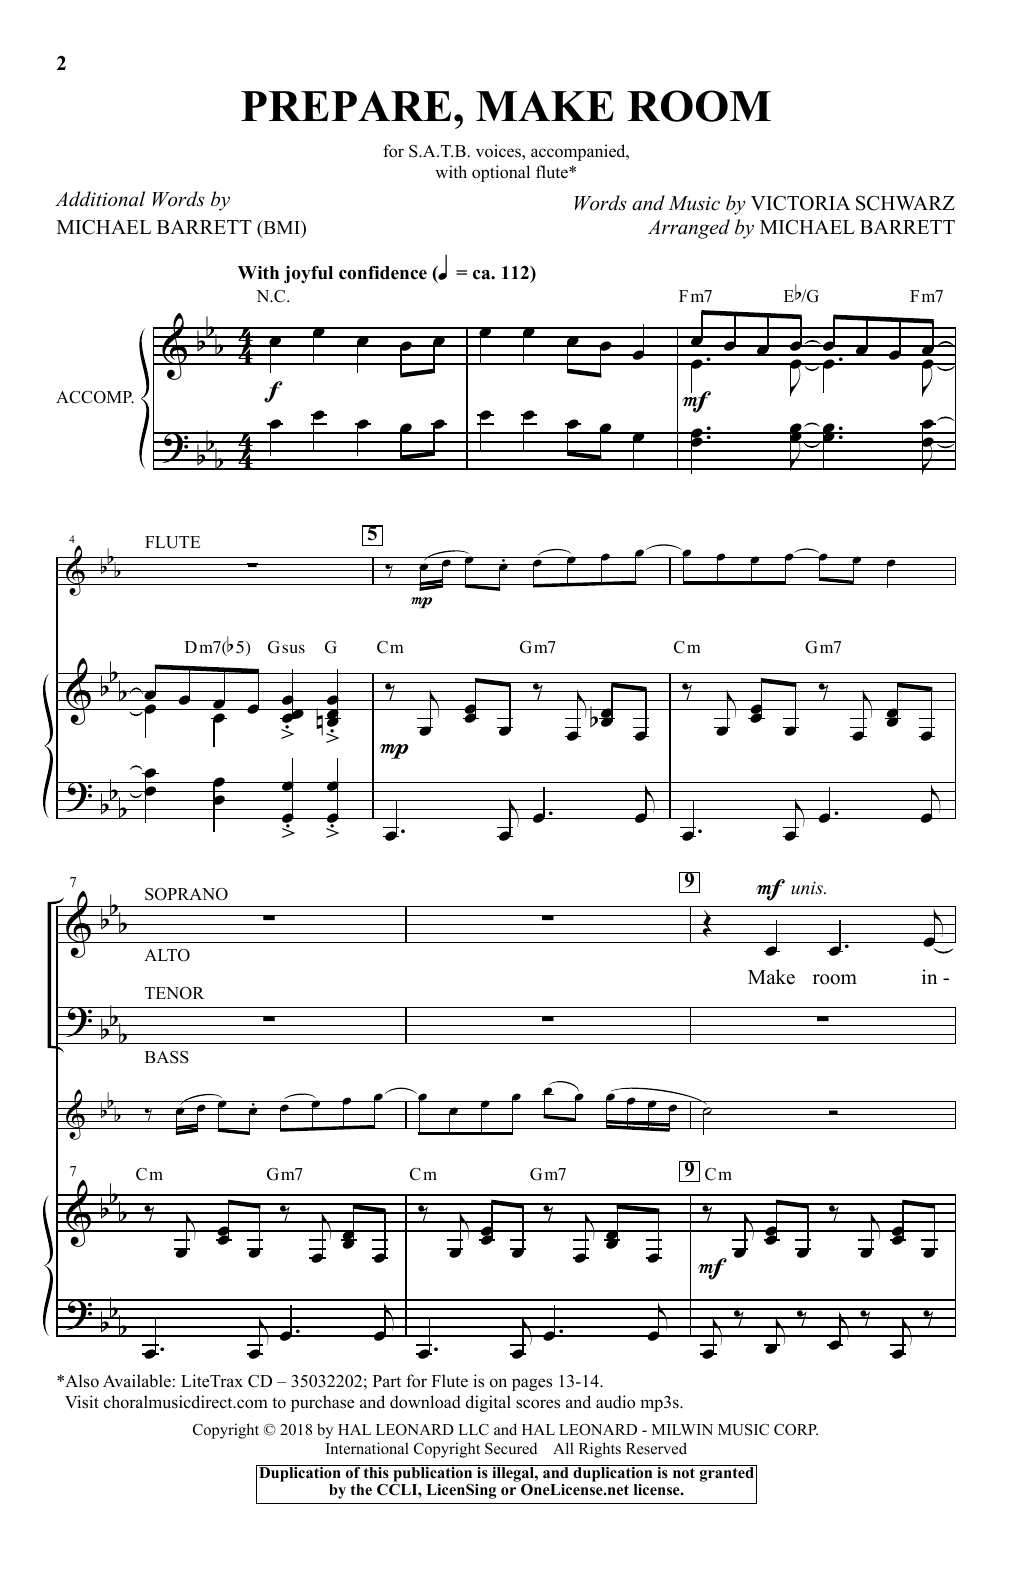 Victoria Schwarz Prepare, Make Room (arr. Michael Barrett) Sheet Music Notes & Chords for Choir - Download or Print PDF